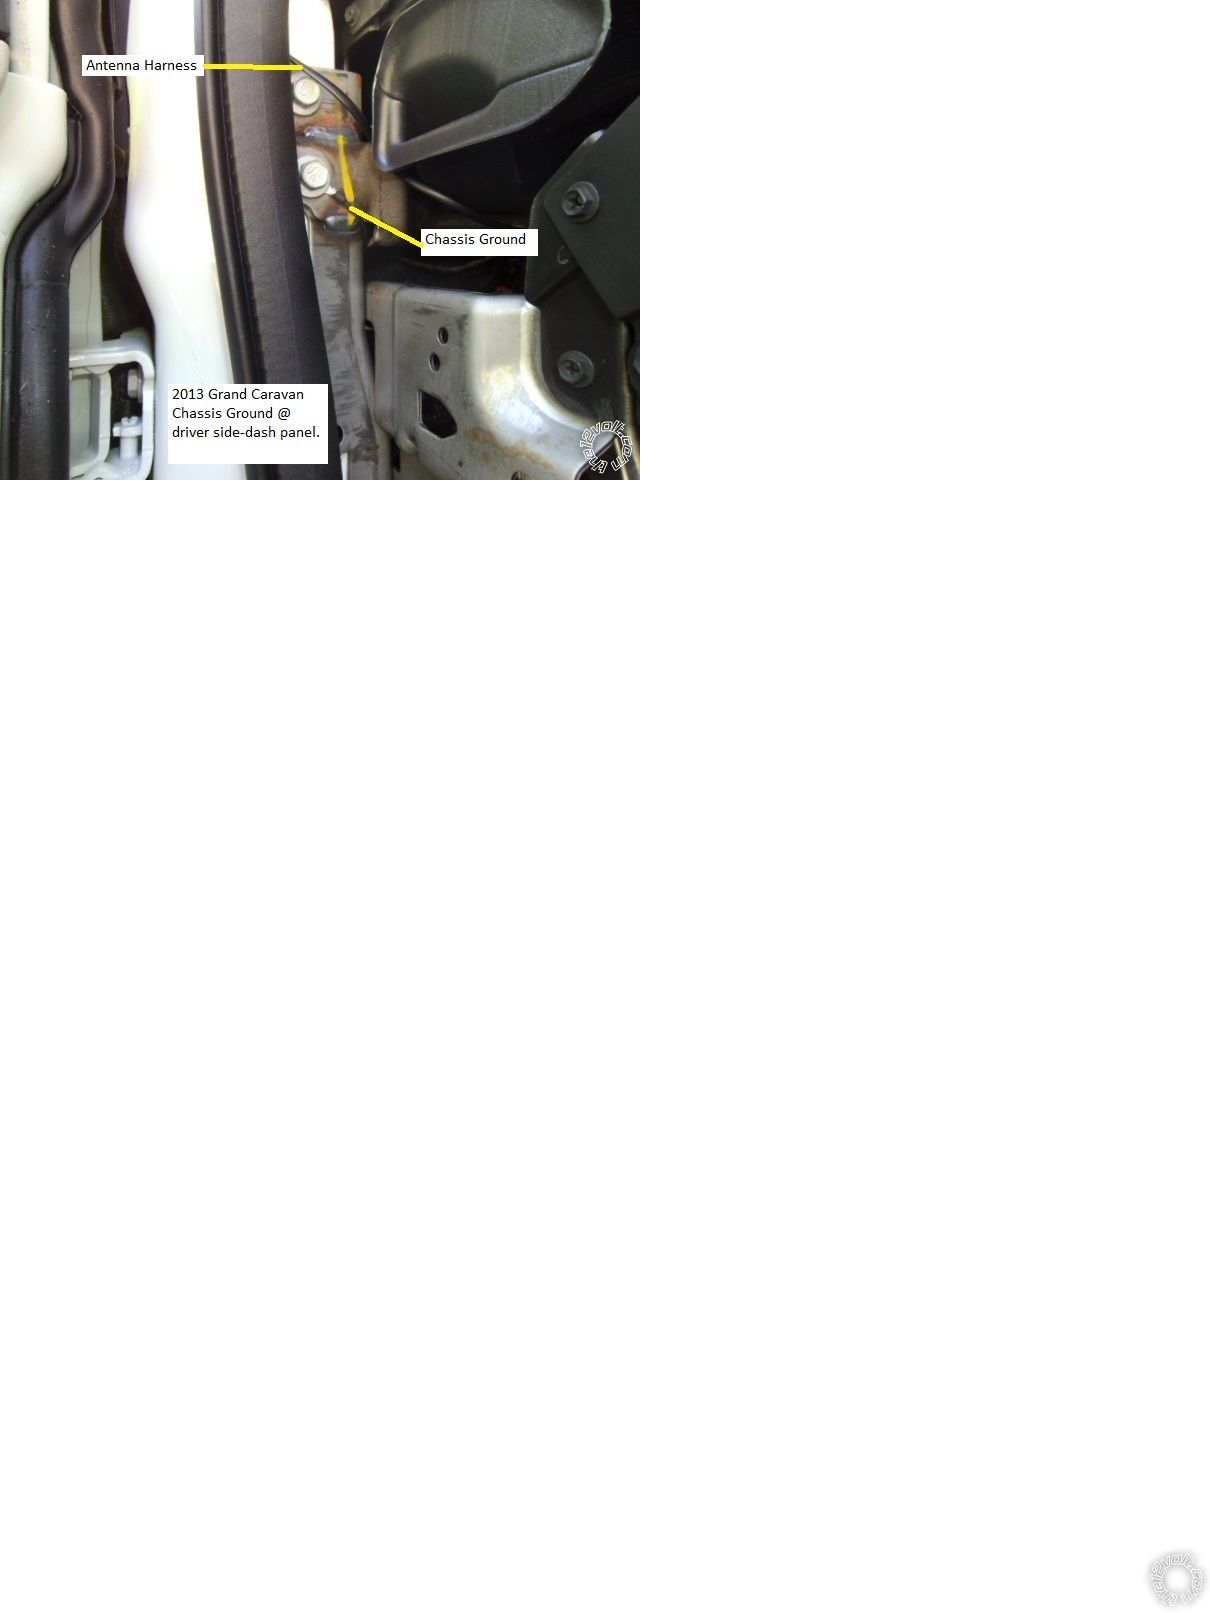 2015 Chevrolet Spark LS, Remote Start - Last Post -- posted image.